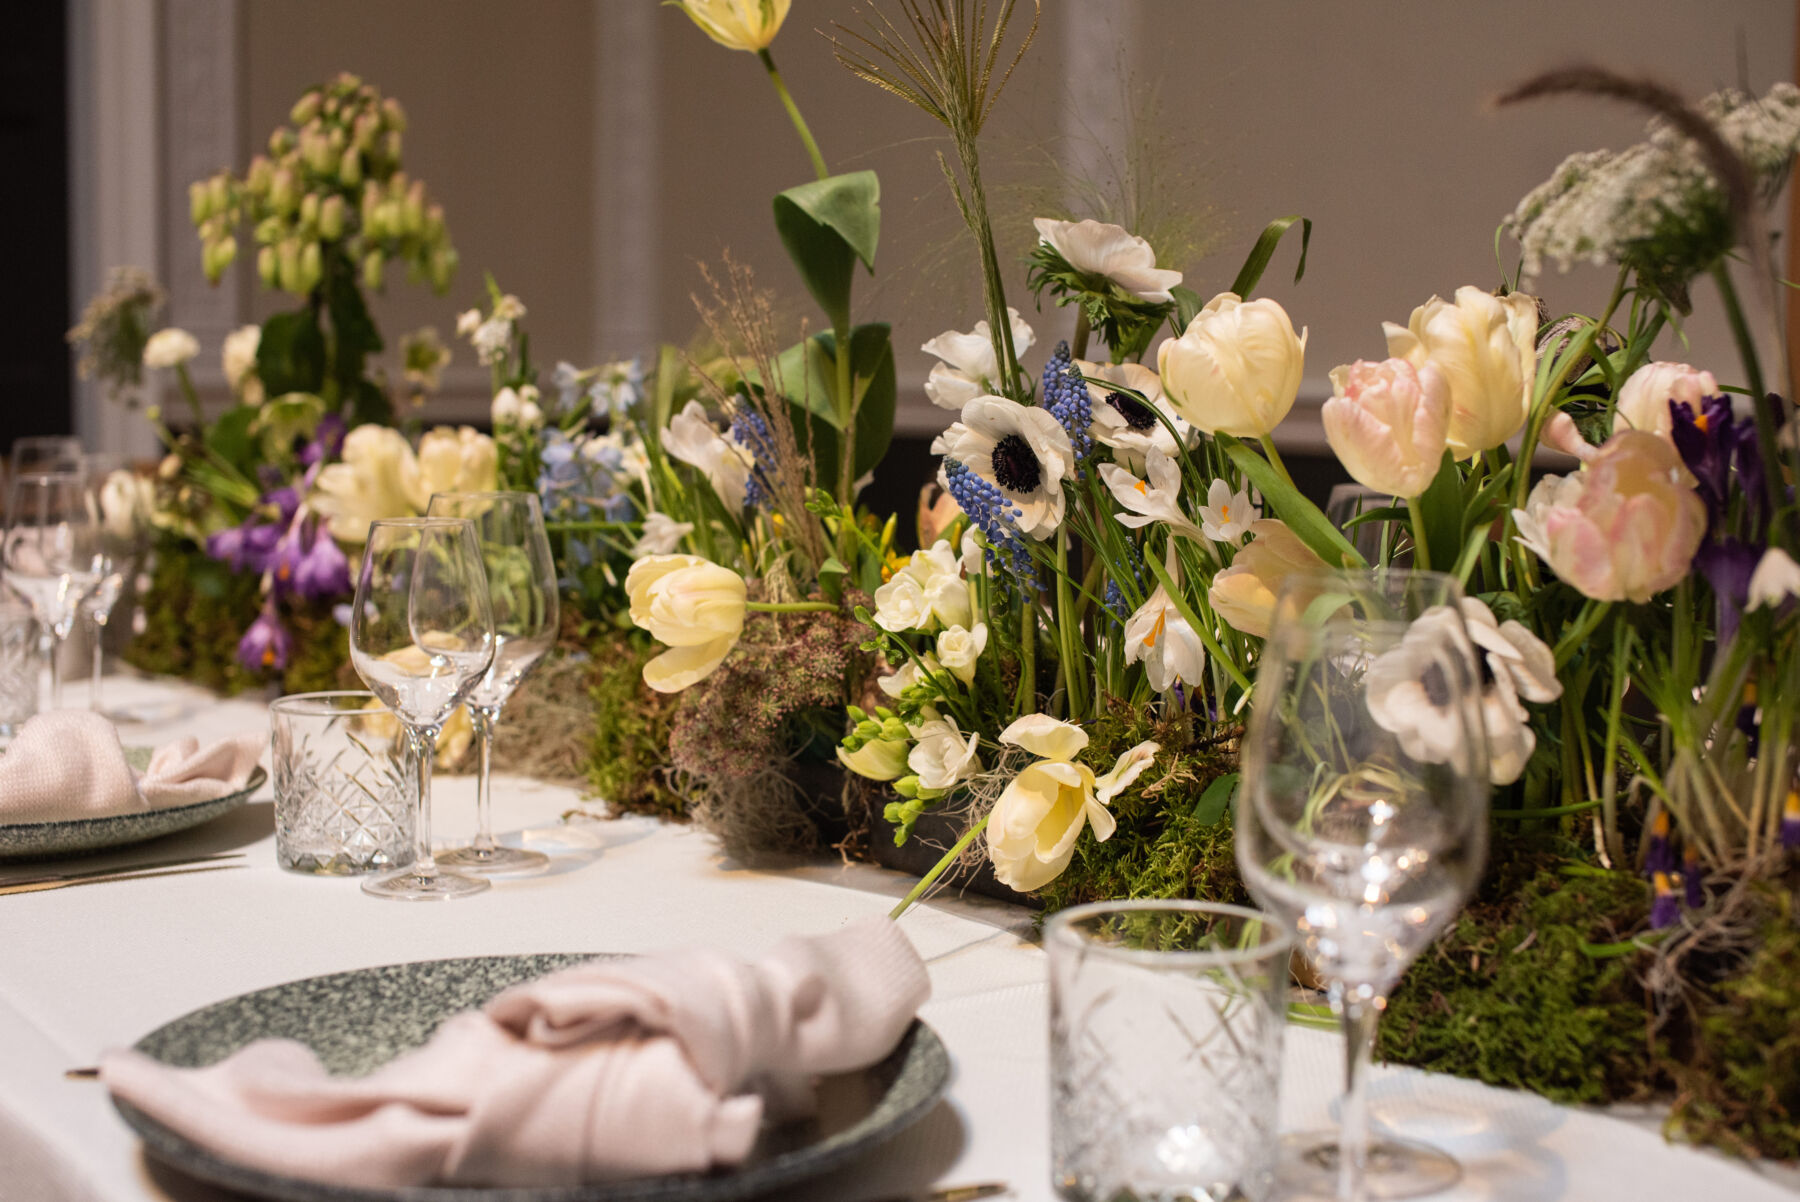 Seasonal Spring wedding flowers by Hayford & Rhodes at RSA House, sustainable London wedding venue